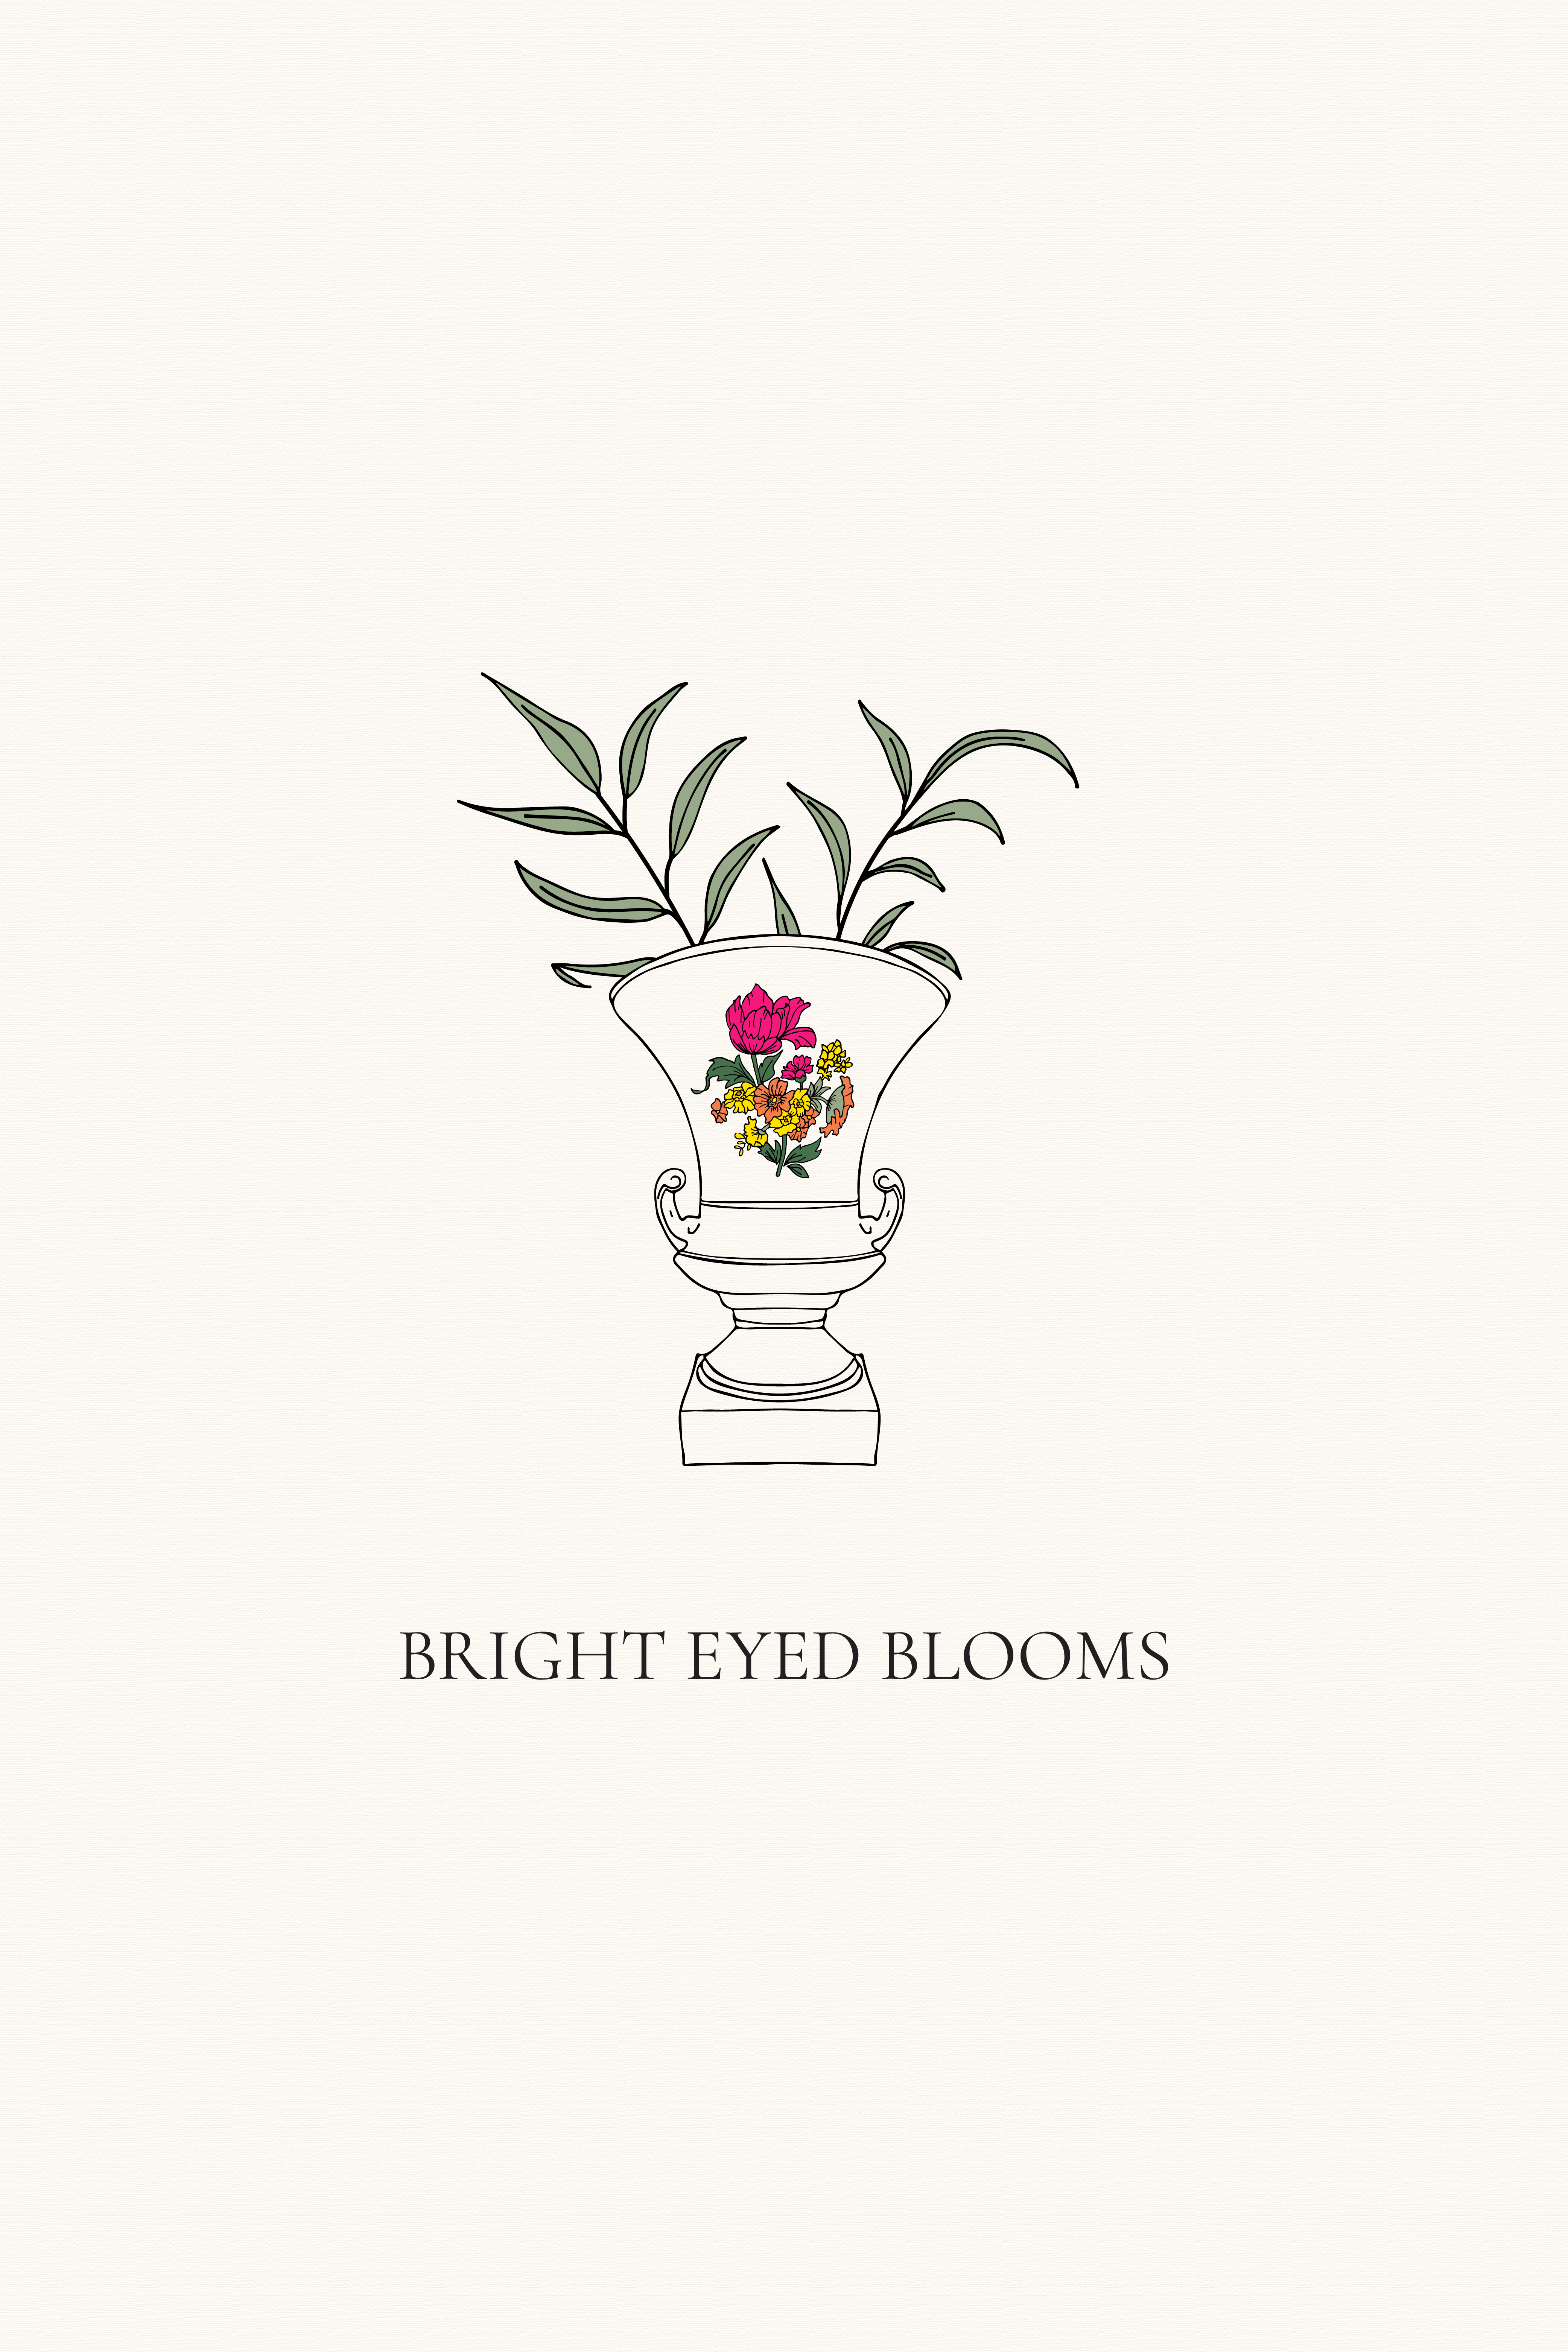 Bright Eyed Blooms brand illustration